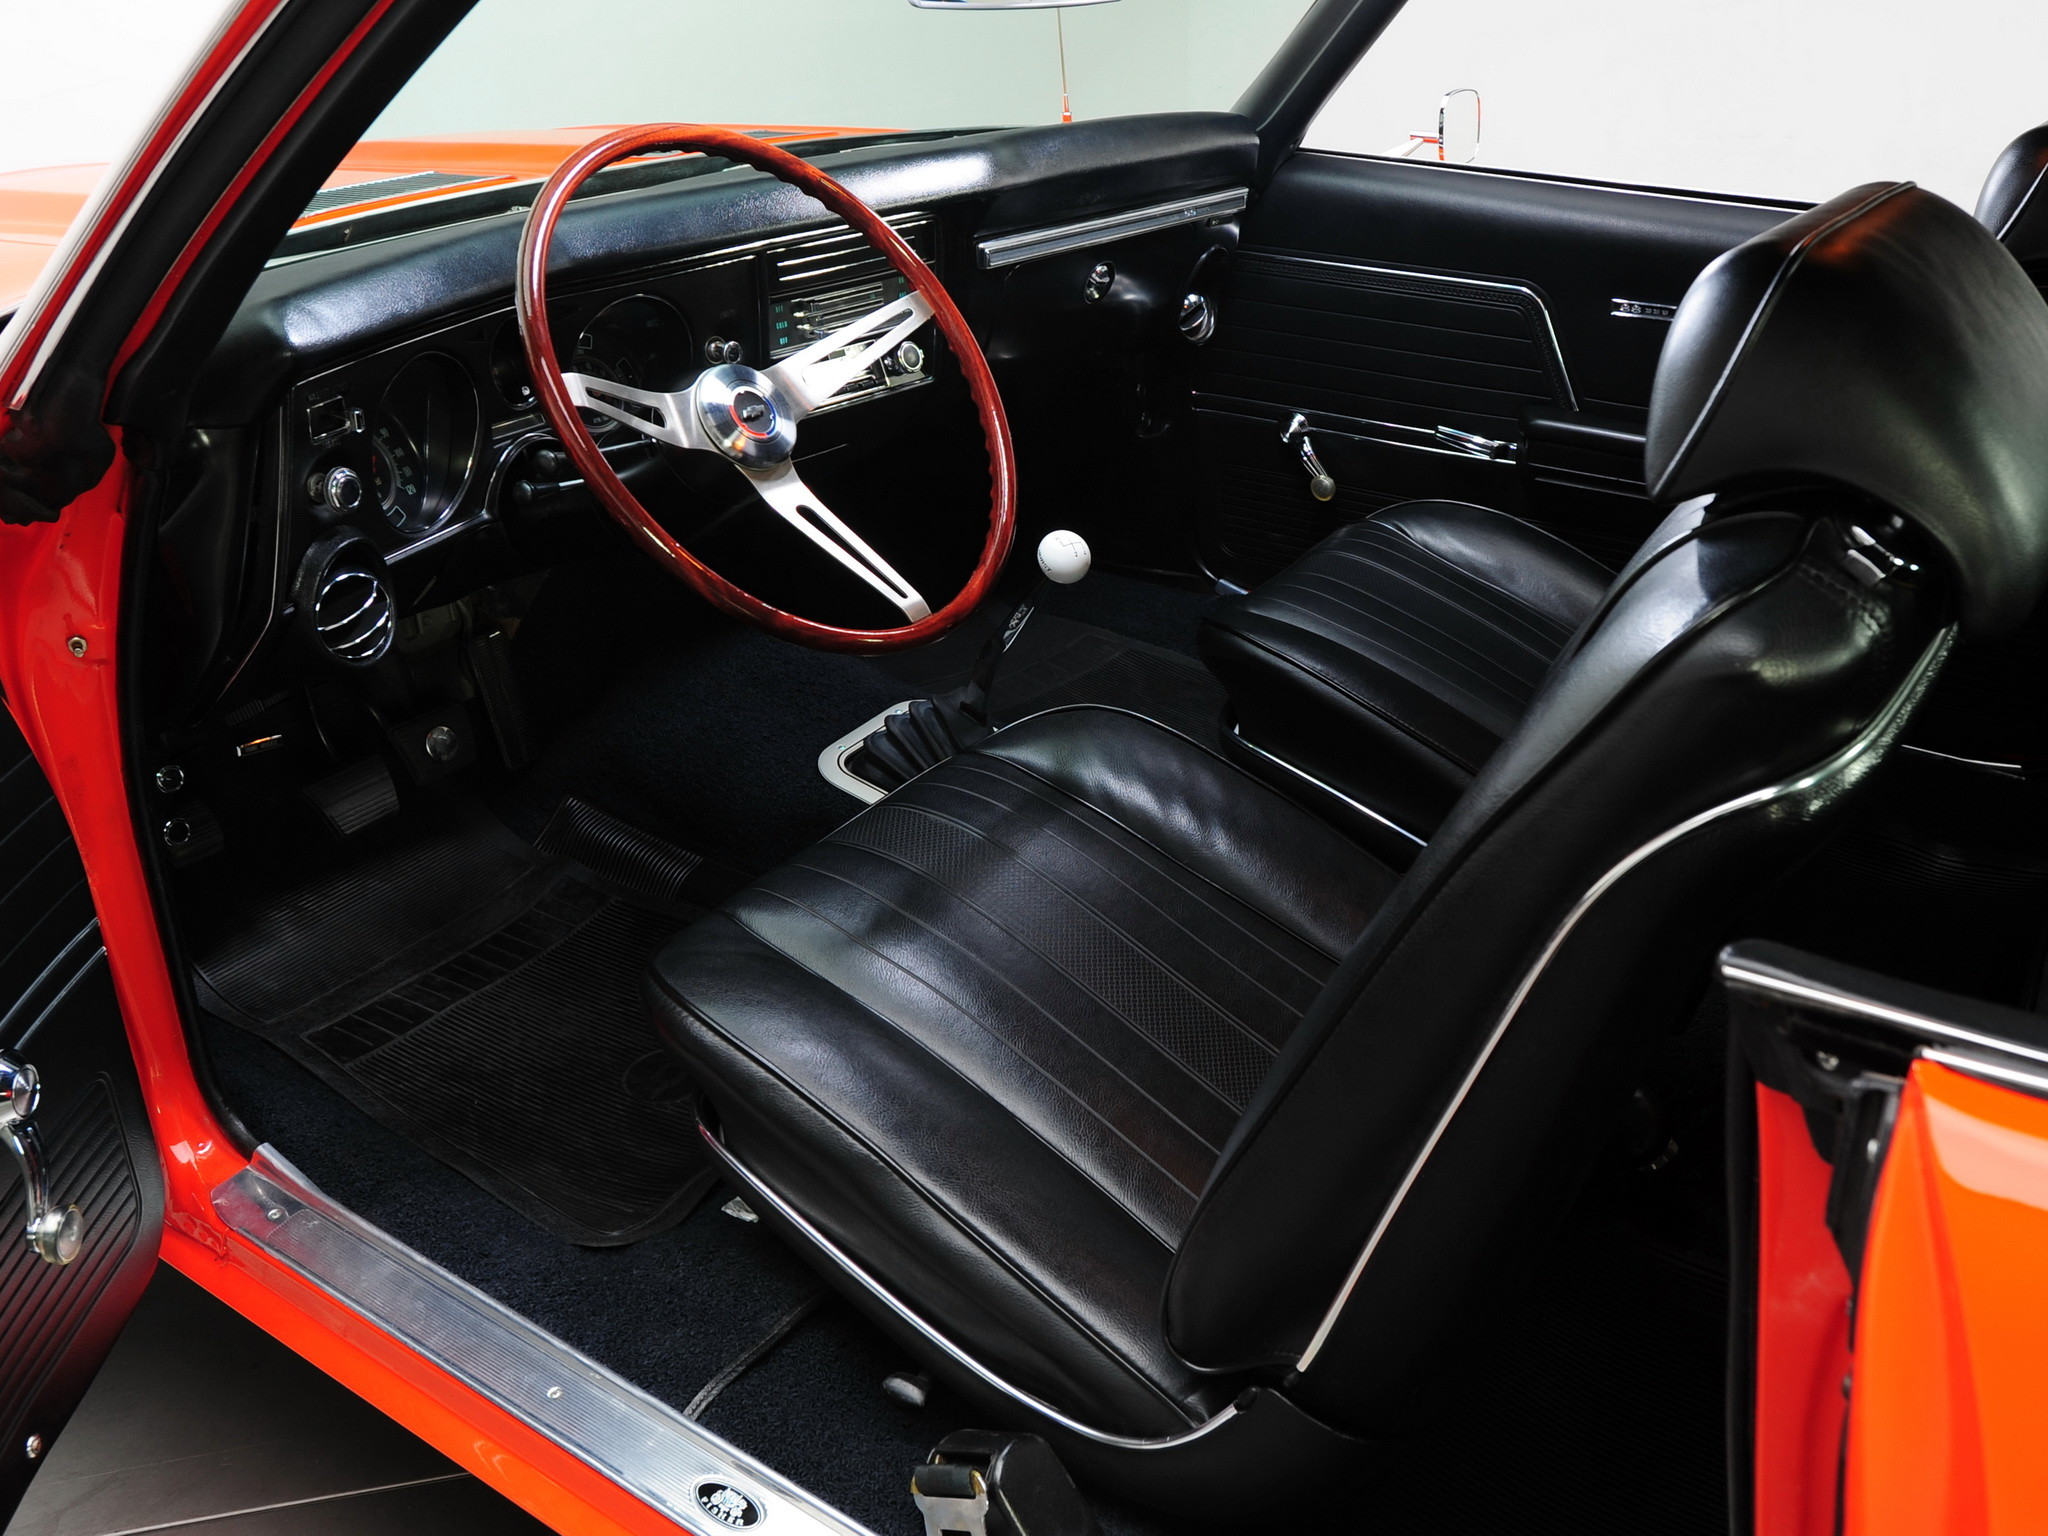 Image 40 of 69 Chevelle Interior